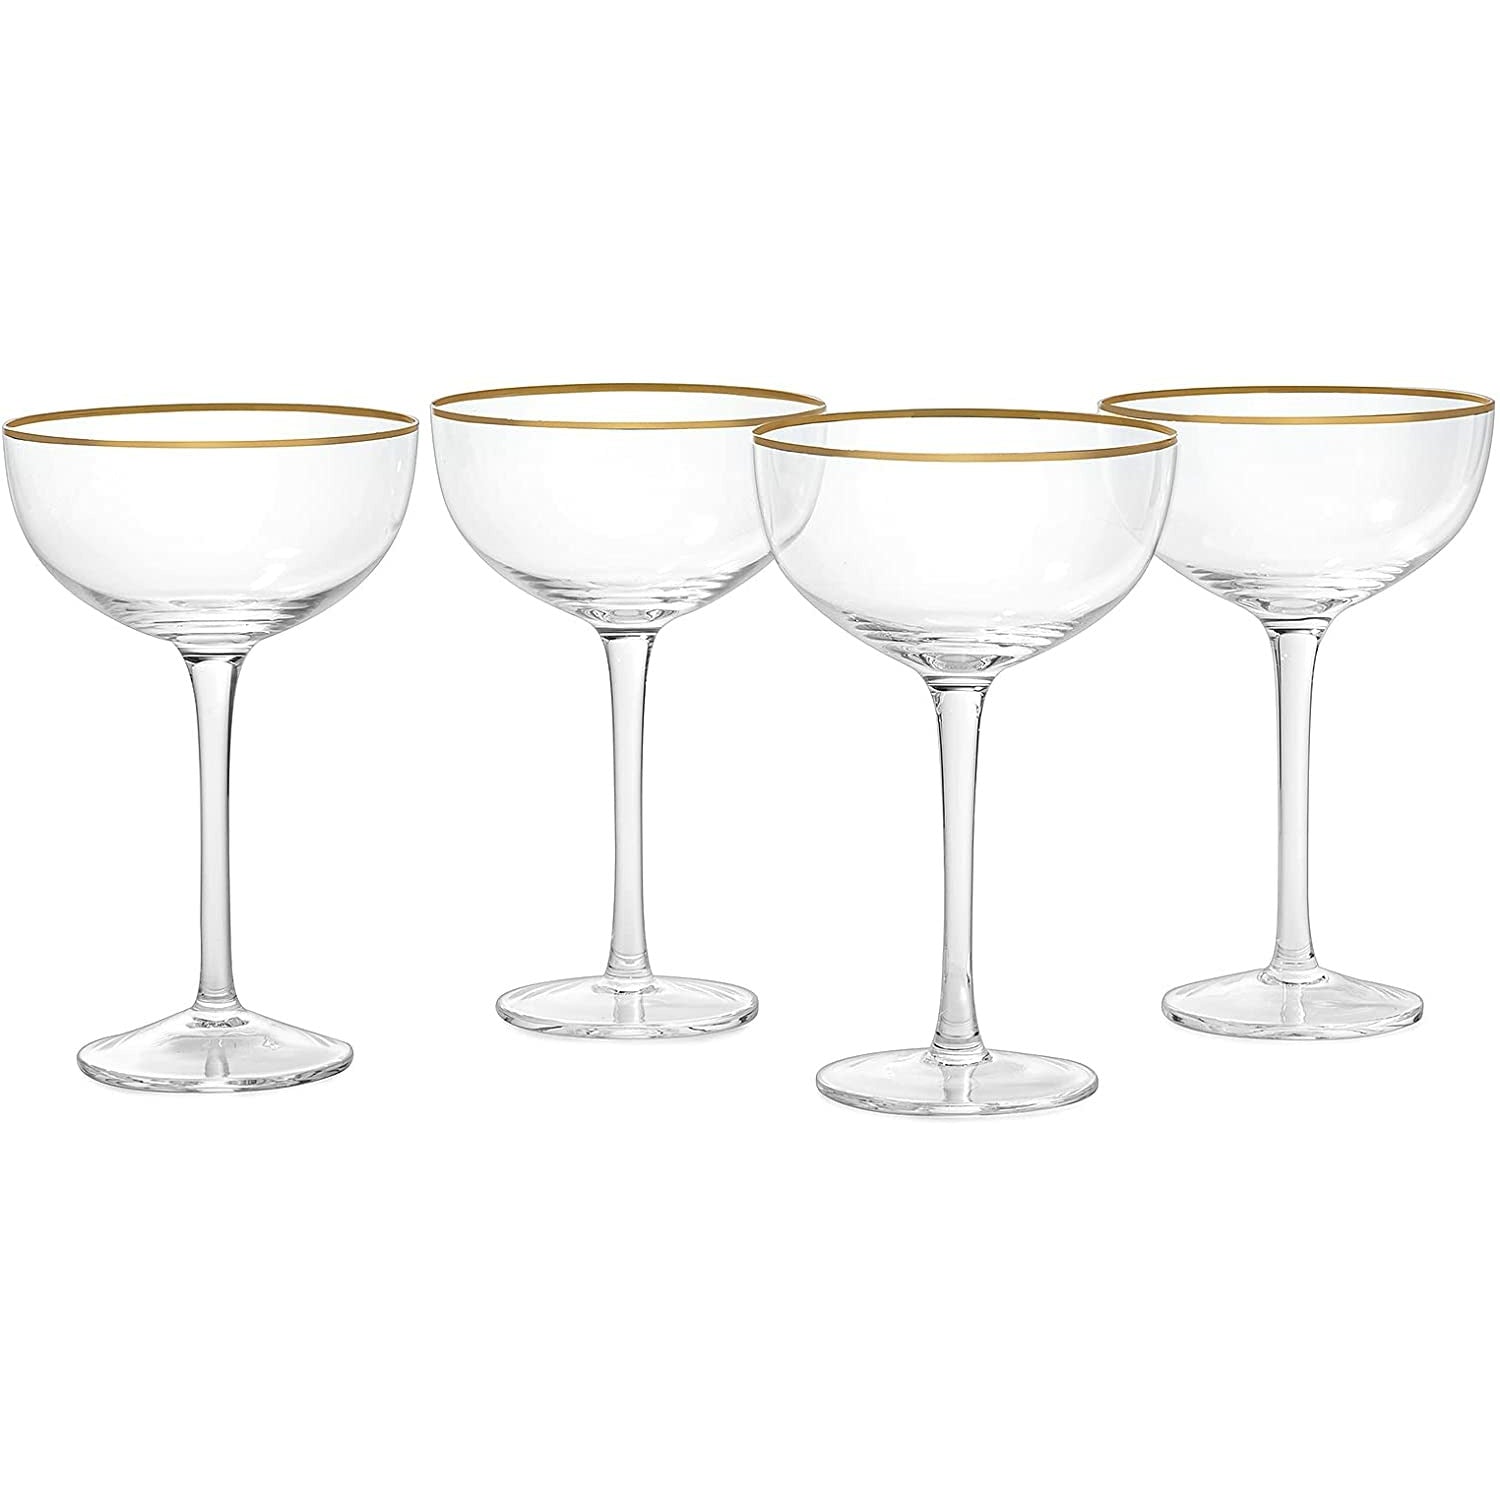 Nuenen 7 Ounce Crystal Coupe Glasses, 220 ml Elegant Short Stem Martini  Glasses, Vintage Champagne G…See more Nuenen 7 Ounce Crystal Coupe Glasses